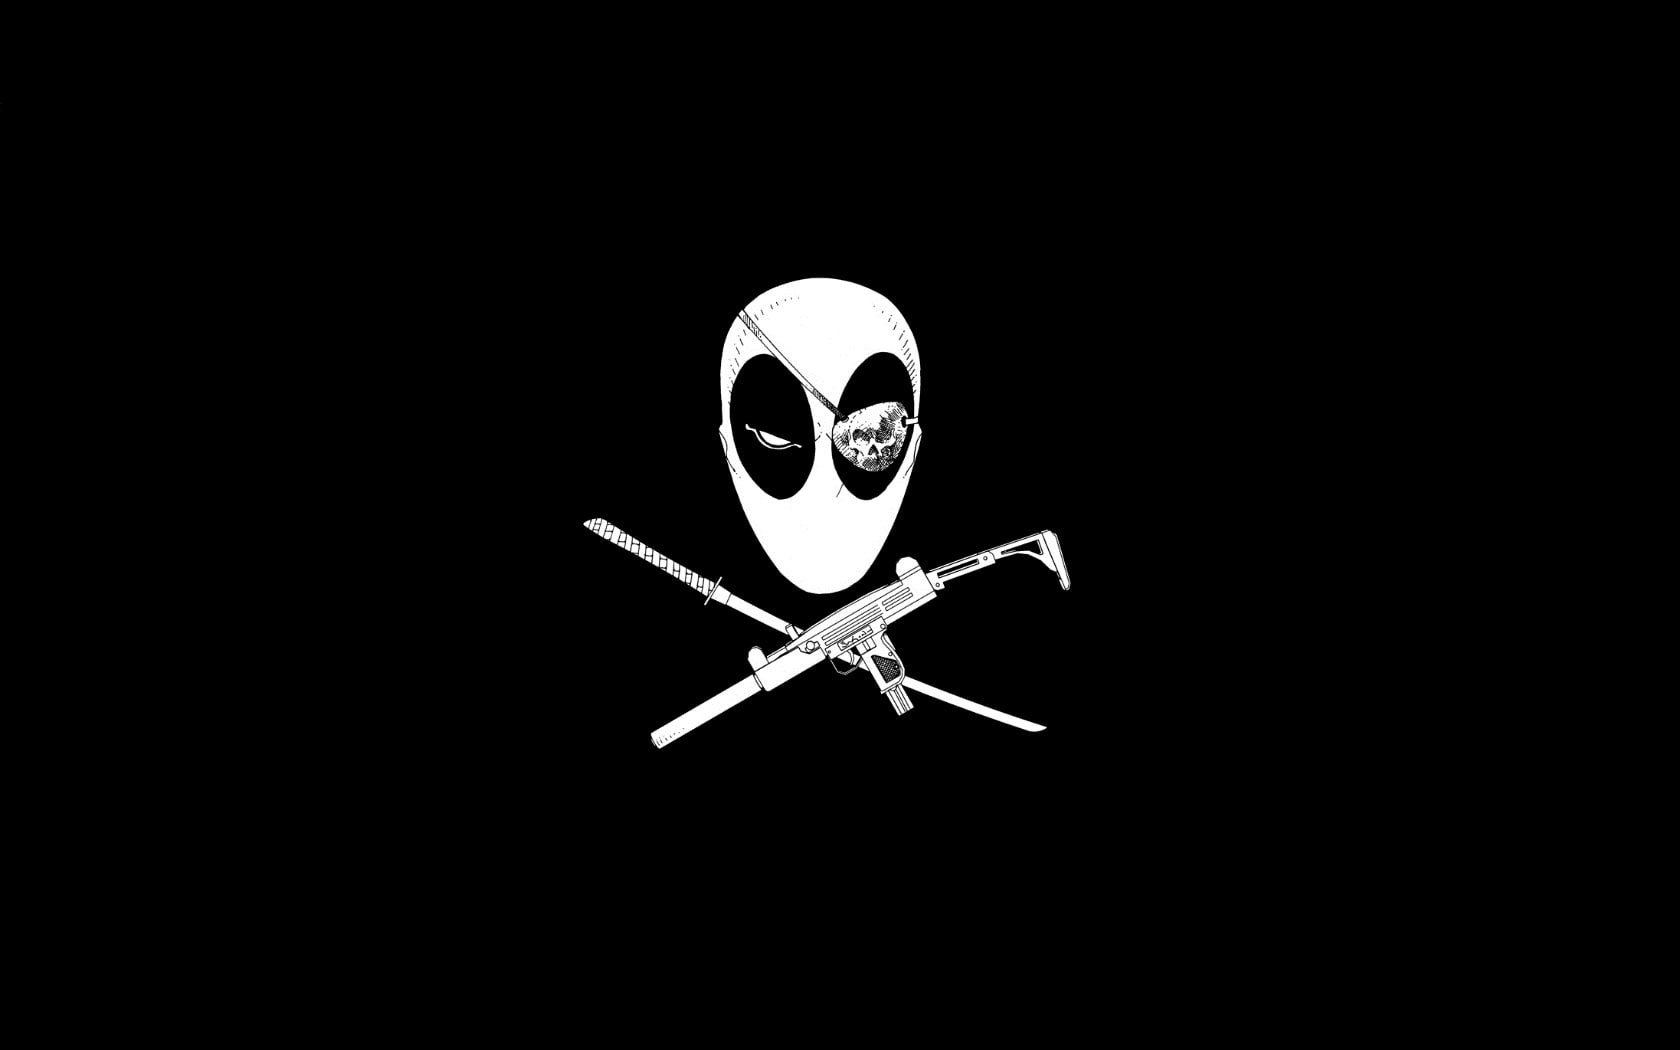 Wallpaper Deadpool Pirate Bw Black Hd, Cartooncomic